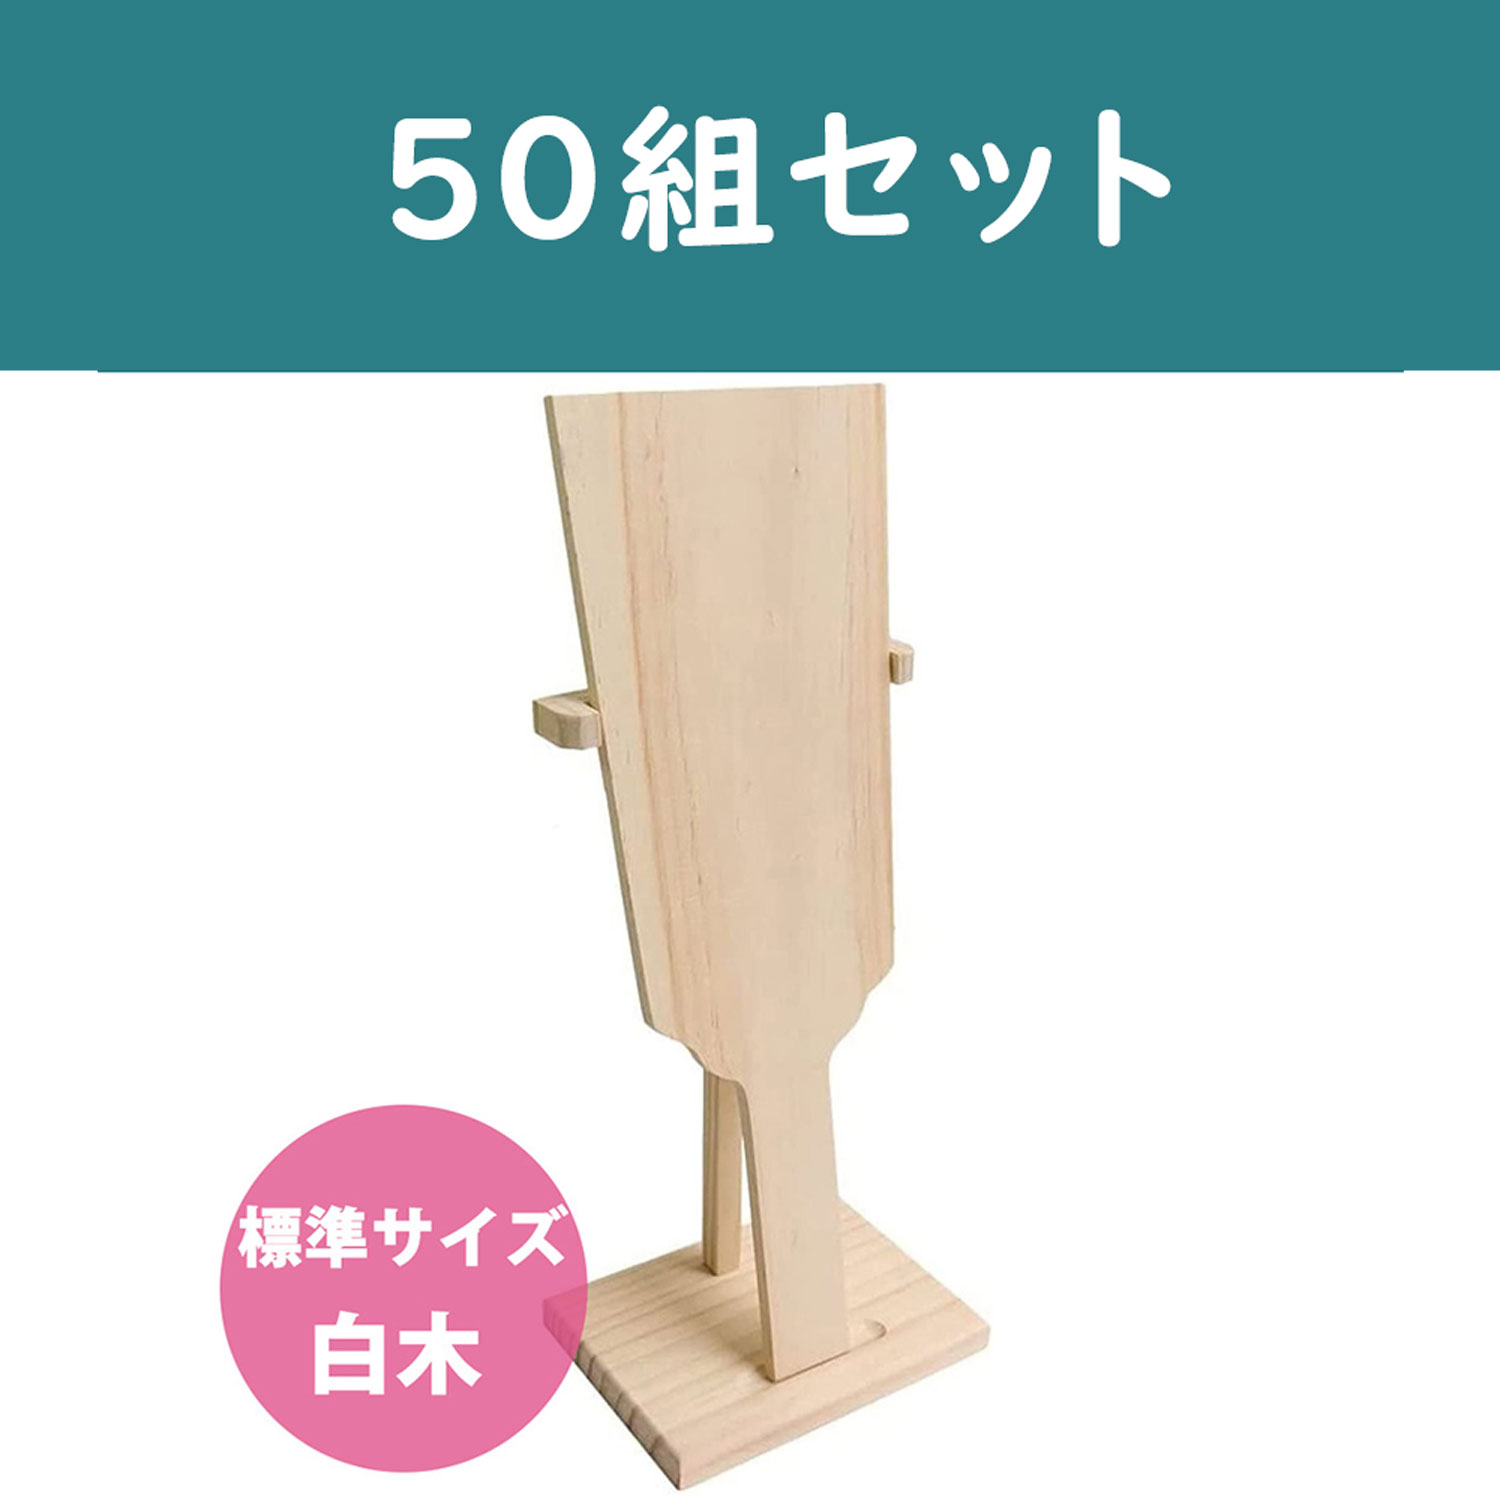 CC1245-50 Hagoita (Decorative Base) Light Wood with Stand 50sets (set)